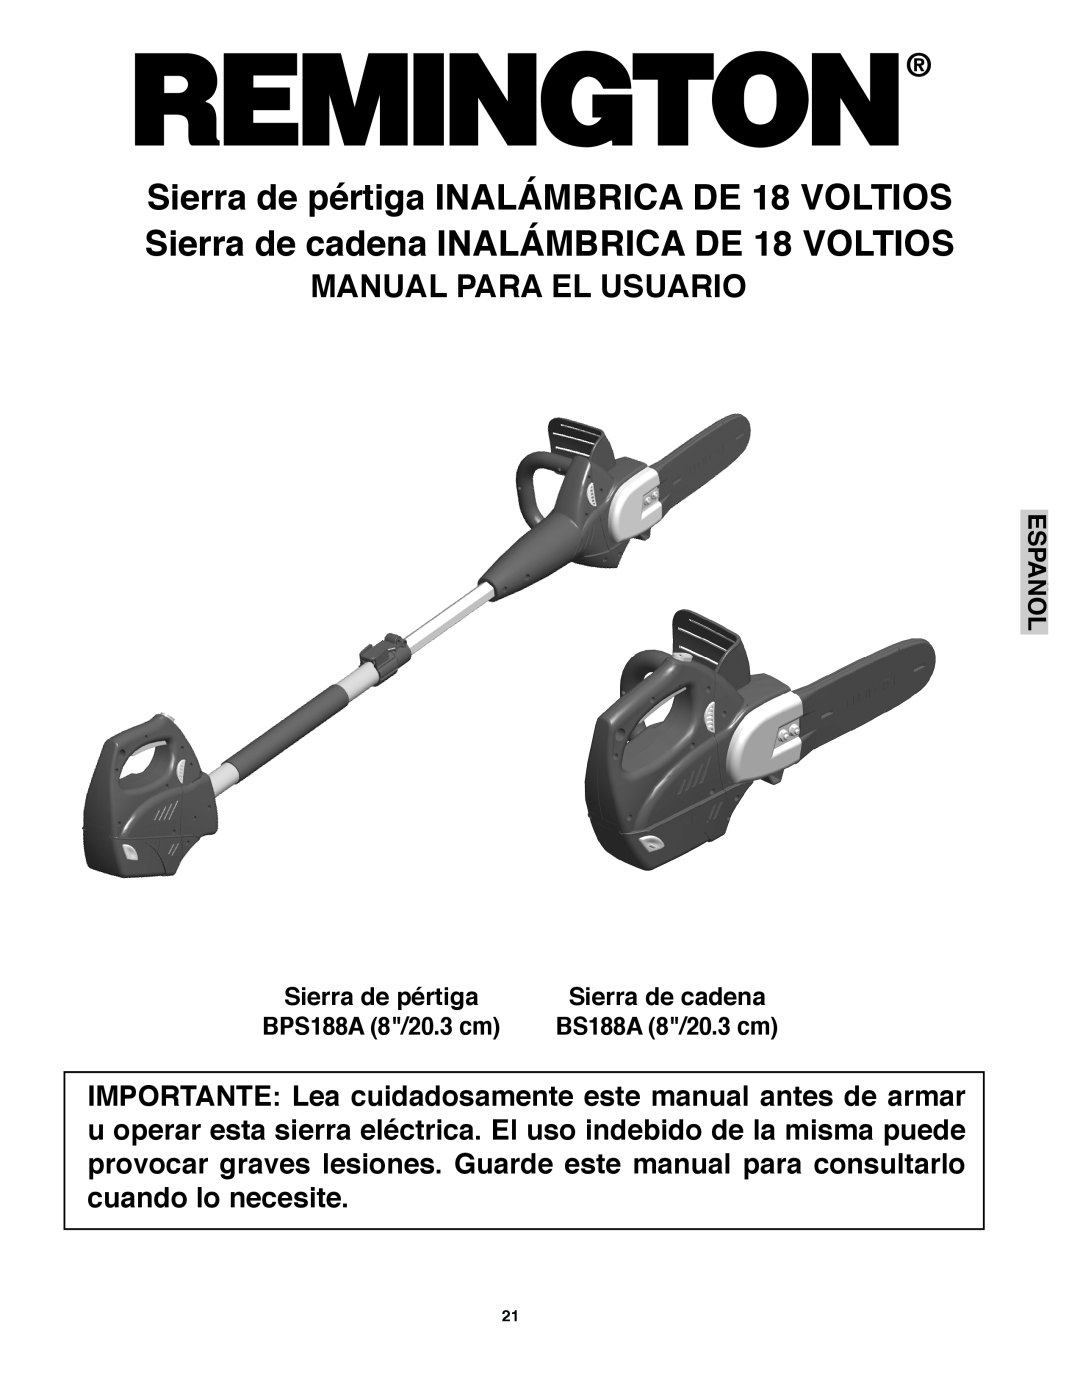 Remington Manual Para El Usuario, Español, Sierra de pértiga, Sierra de cadena, BPS188A 8/20.3 cm, BS188A 8/20.3 cm 